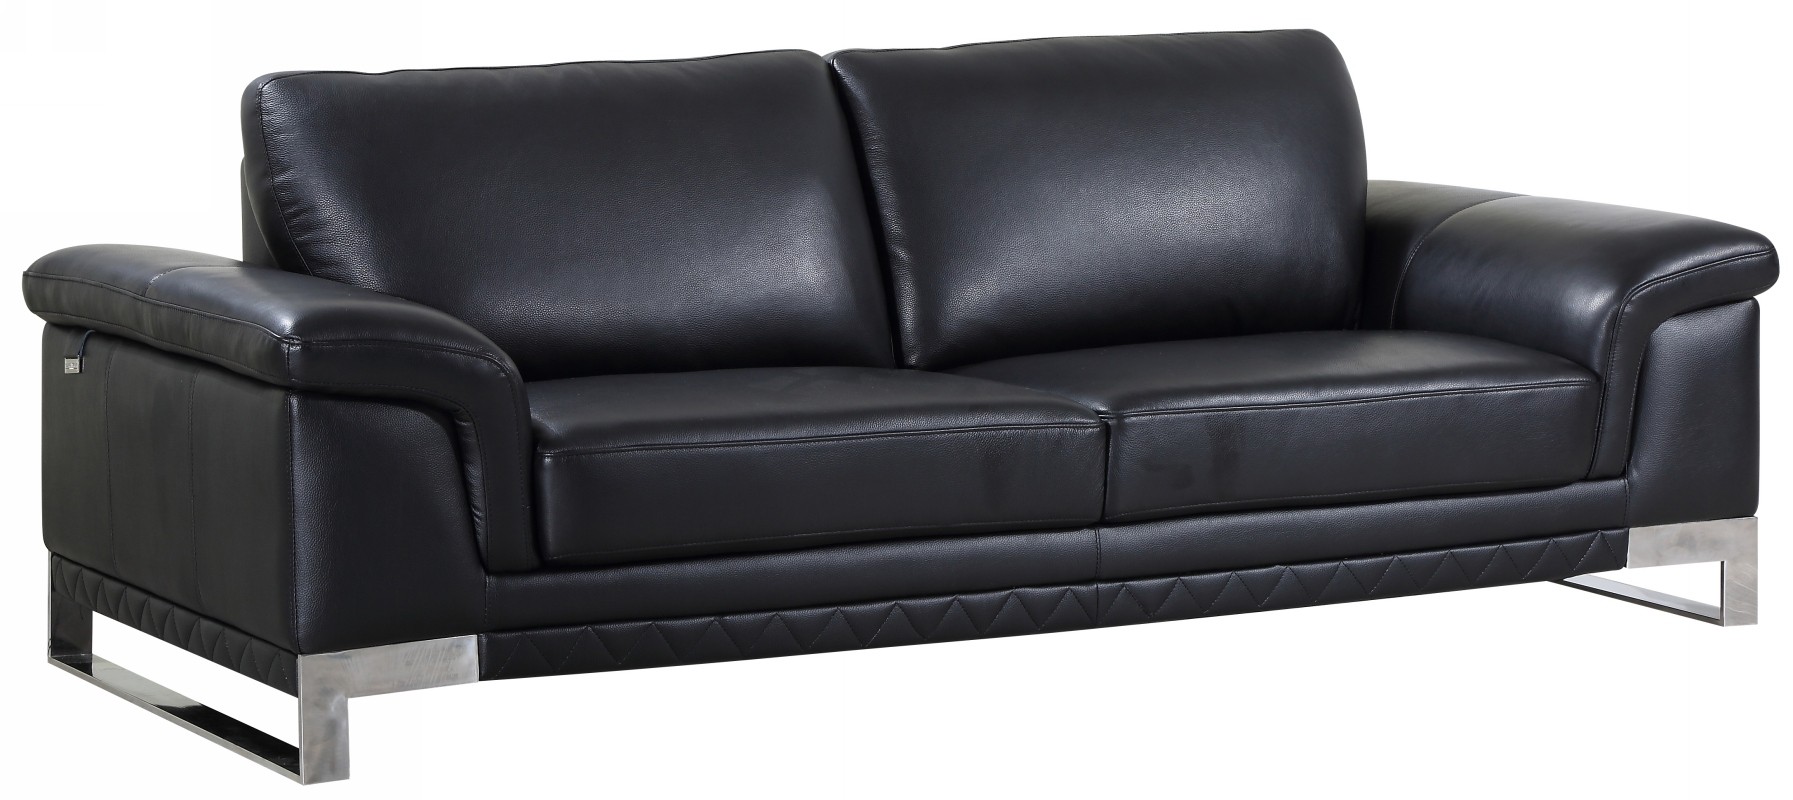 100 genuine leather black sofa